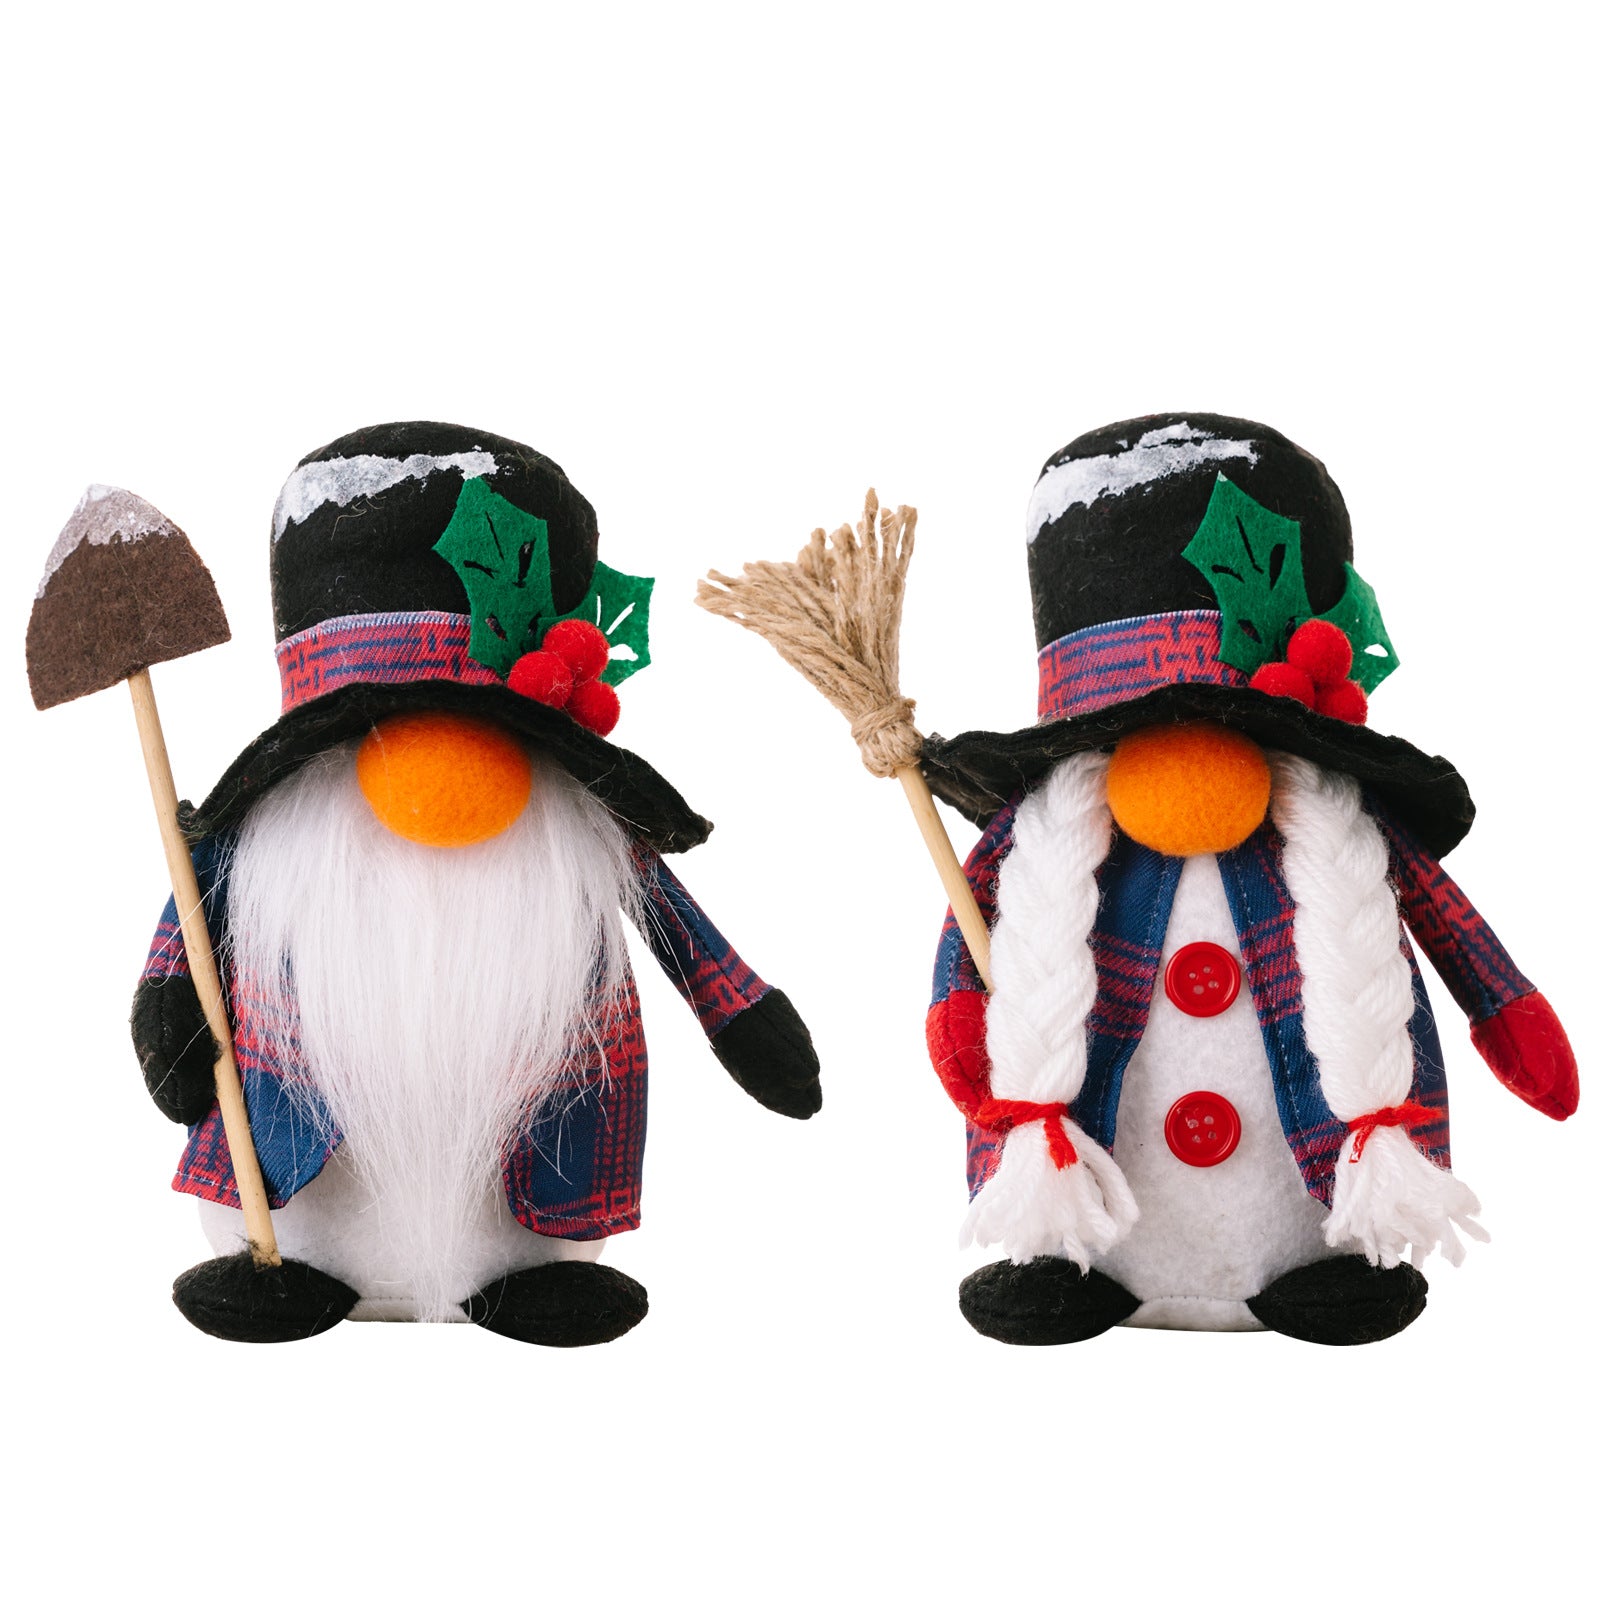 Christmas winter gnomes with broom and shovel